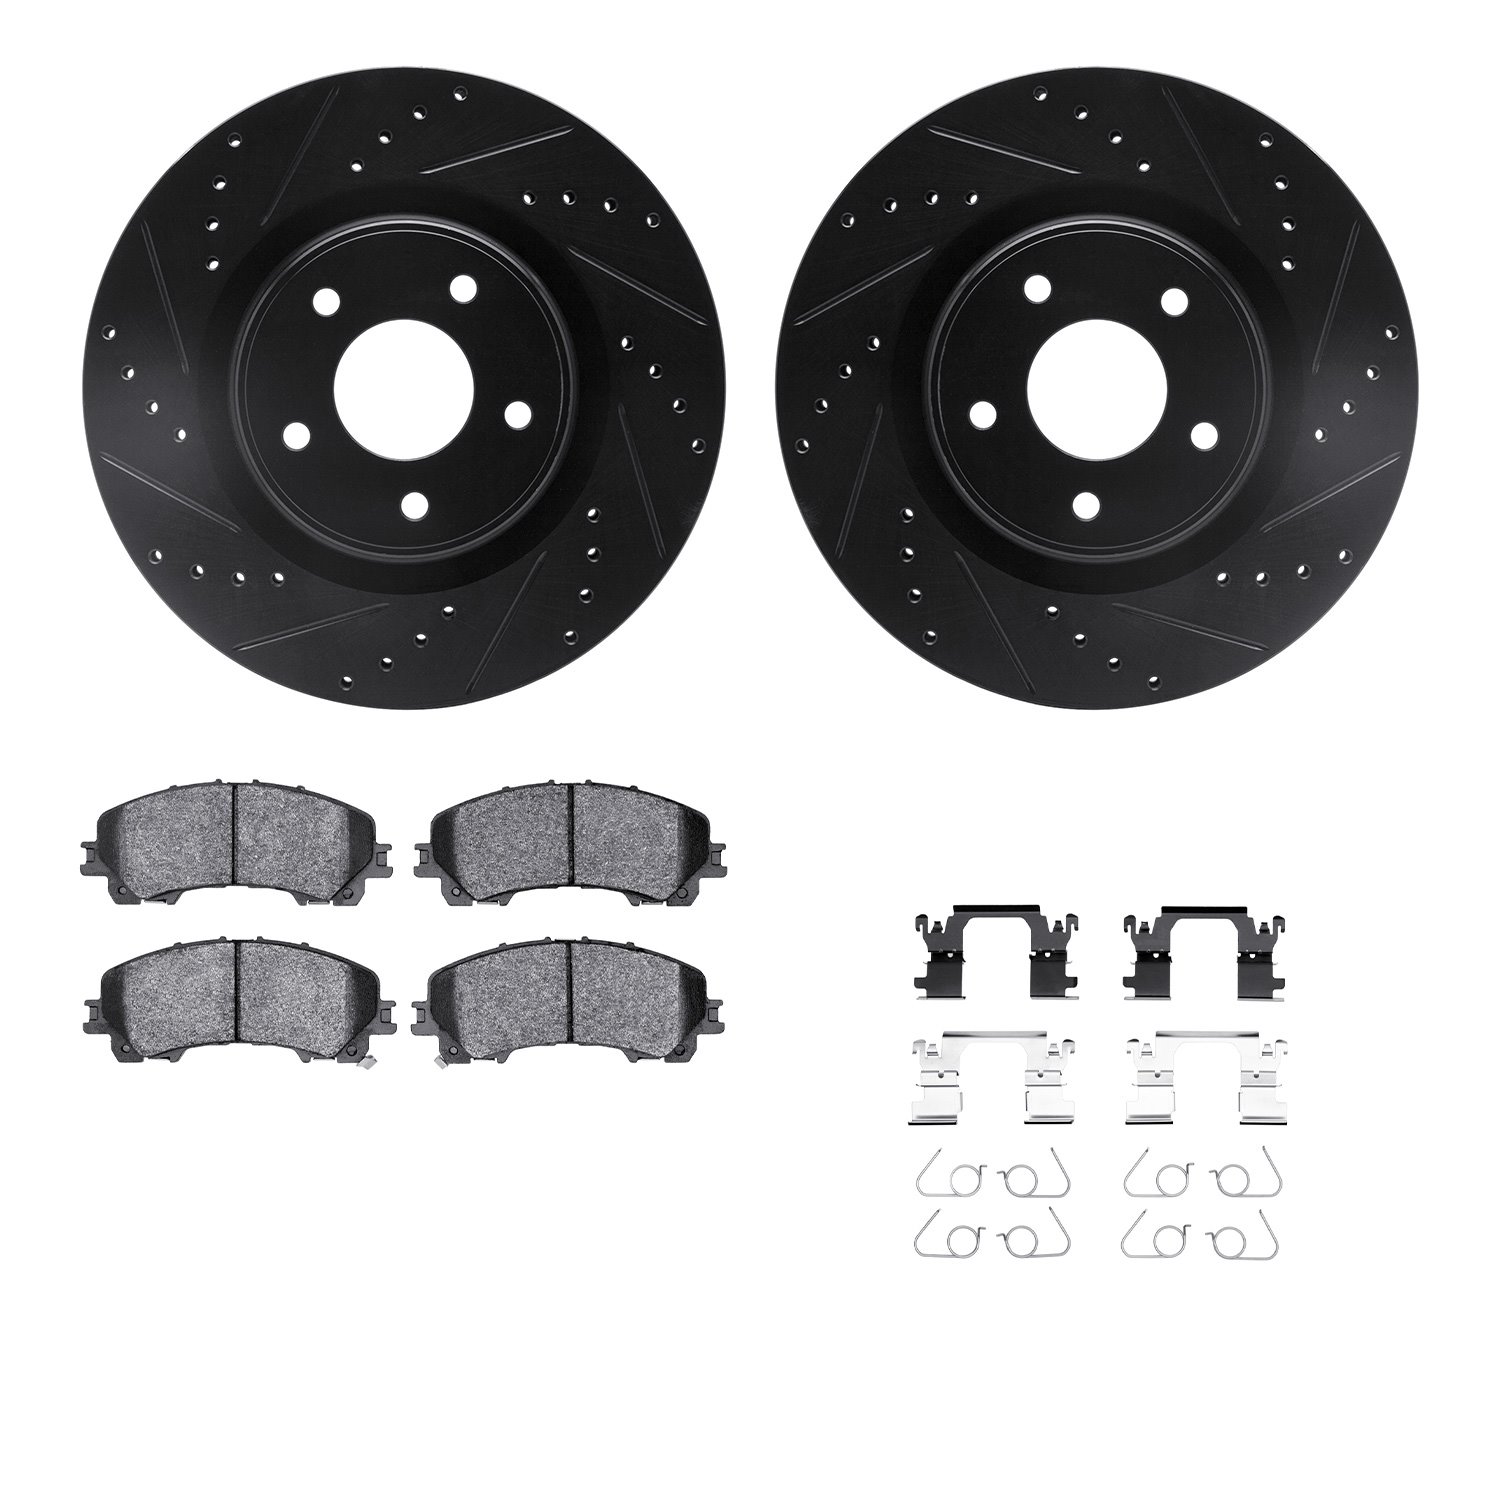 8312-67129 Drilled/Slotted Brake Rotors with 3000-Series Ceramic Brake Pads Kit & Hardware [Black], Fits Select Infiniti/Nissan,